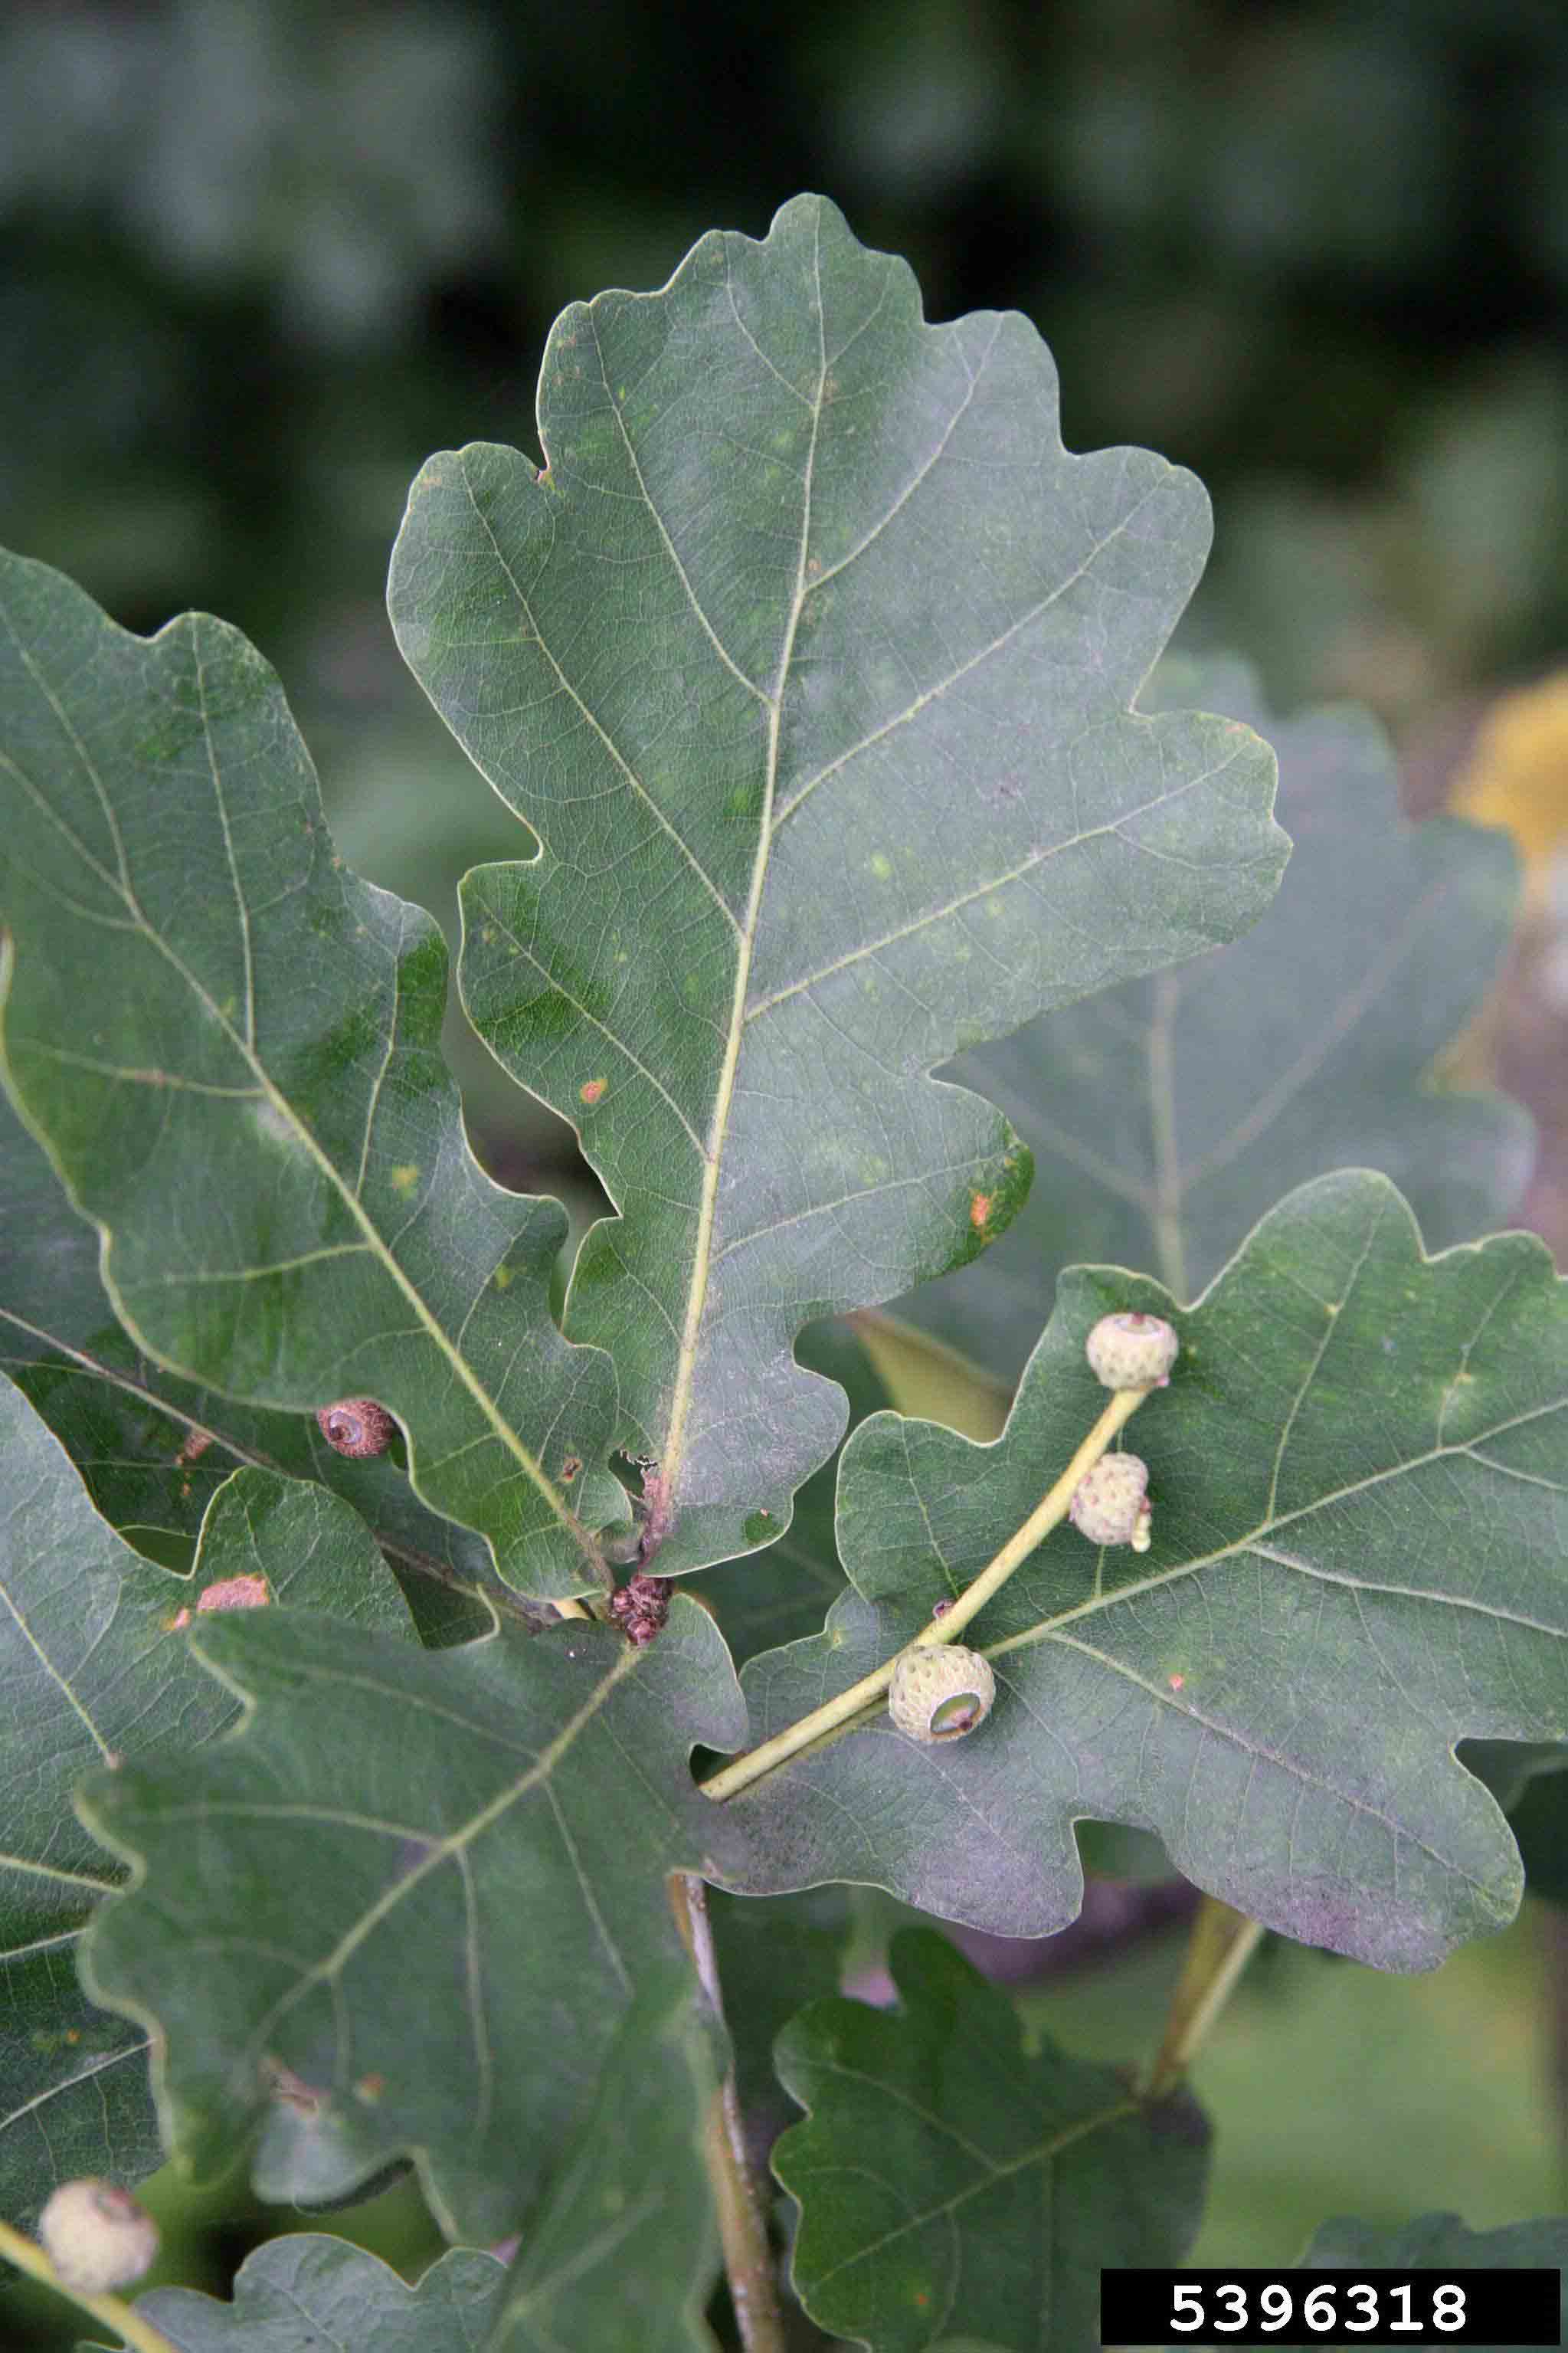 English oak foliage and immature acorns